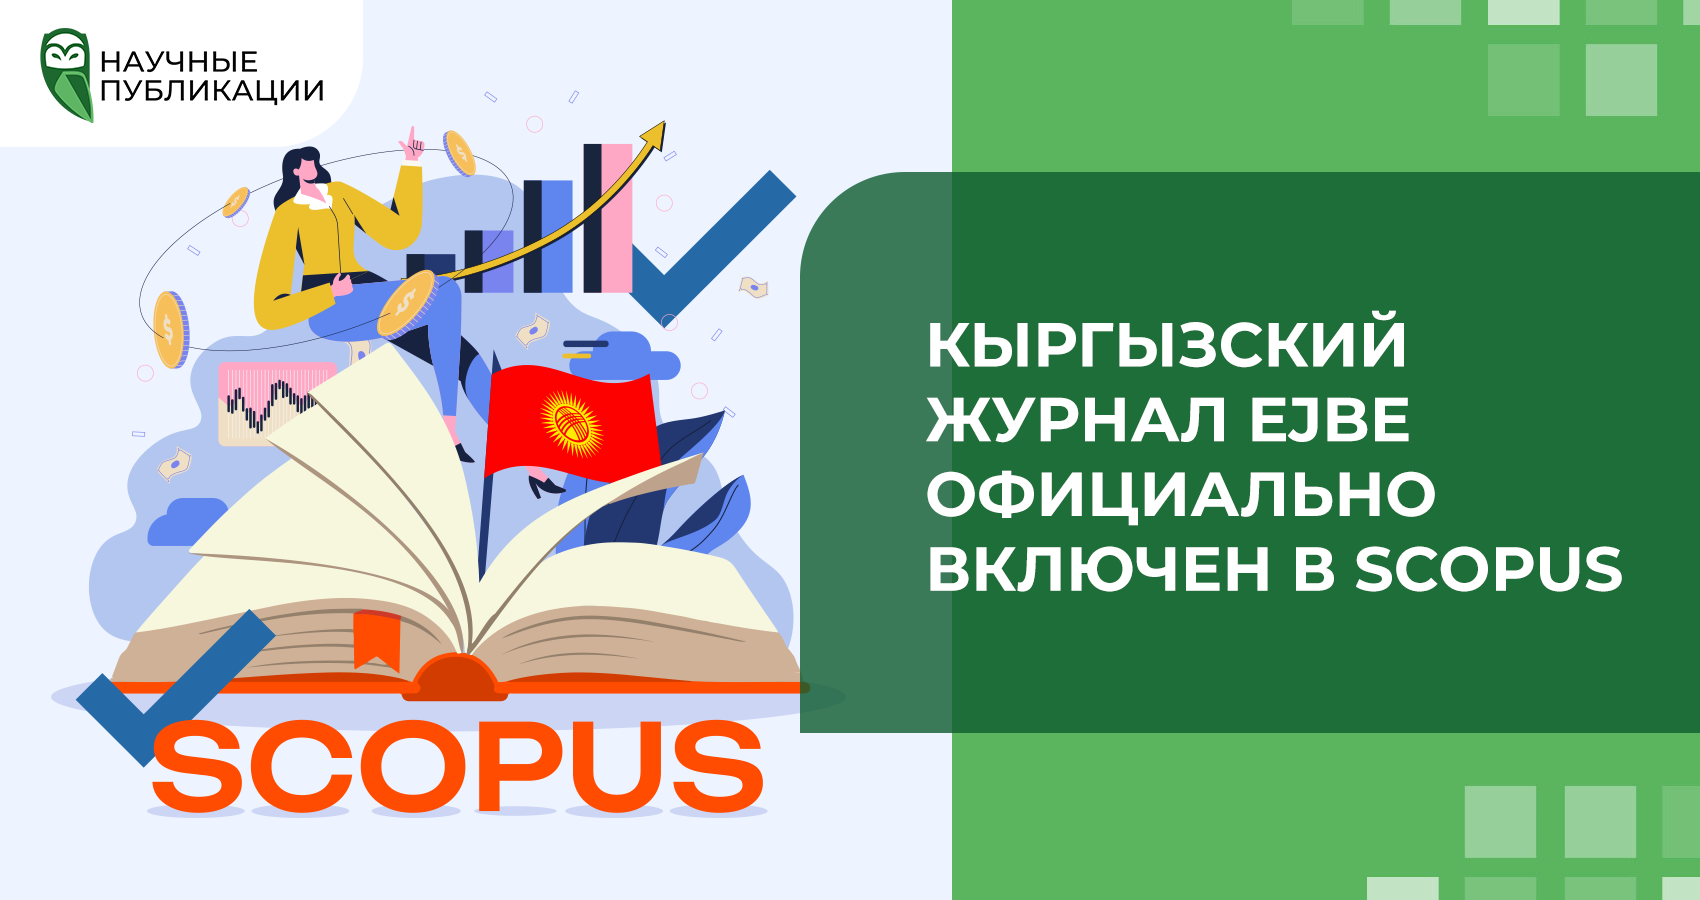 Кыргызский журнал Eurasian Journal of Business and Economics (EJBE) официально включен в Scopus